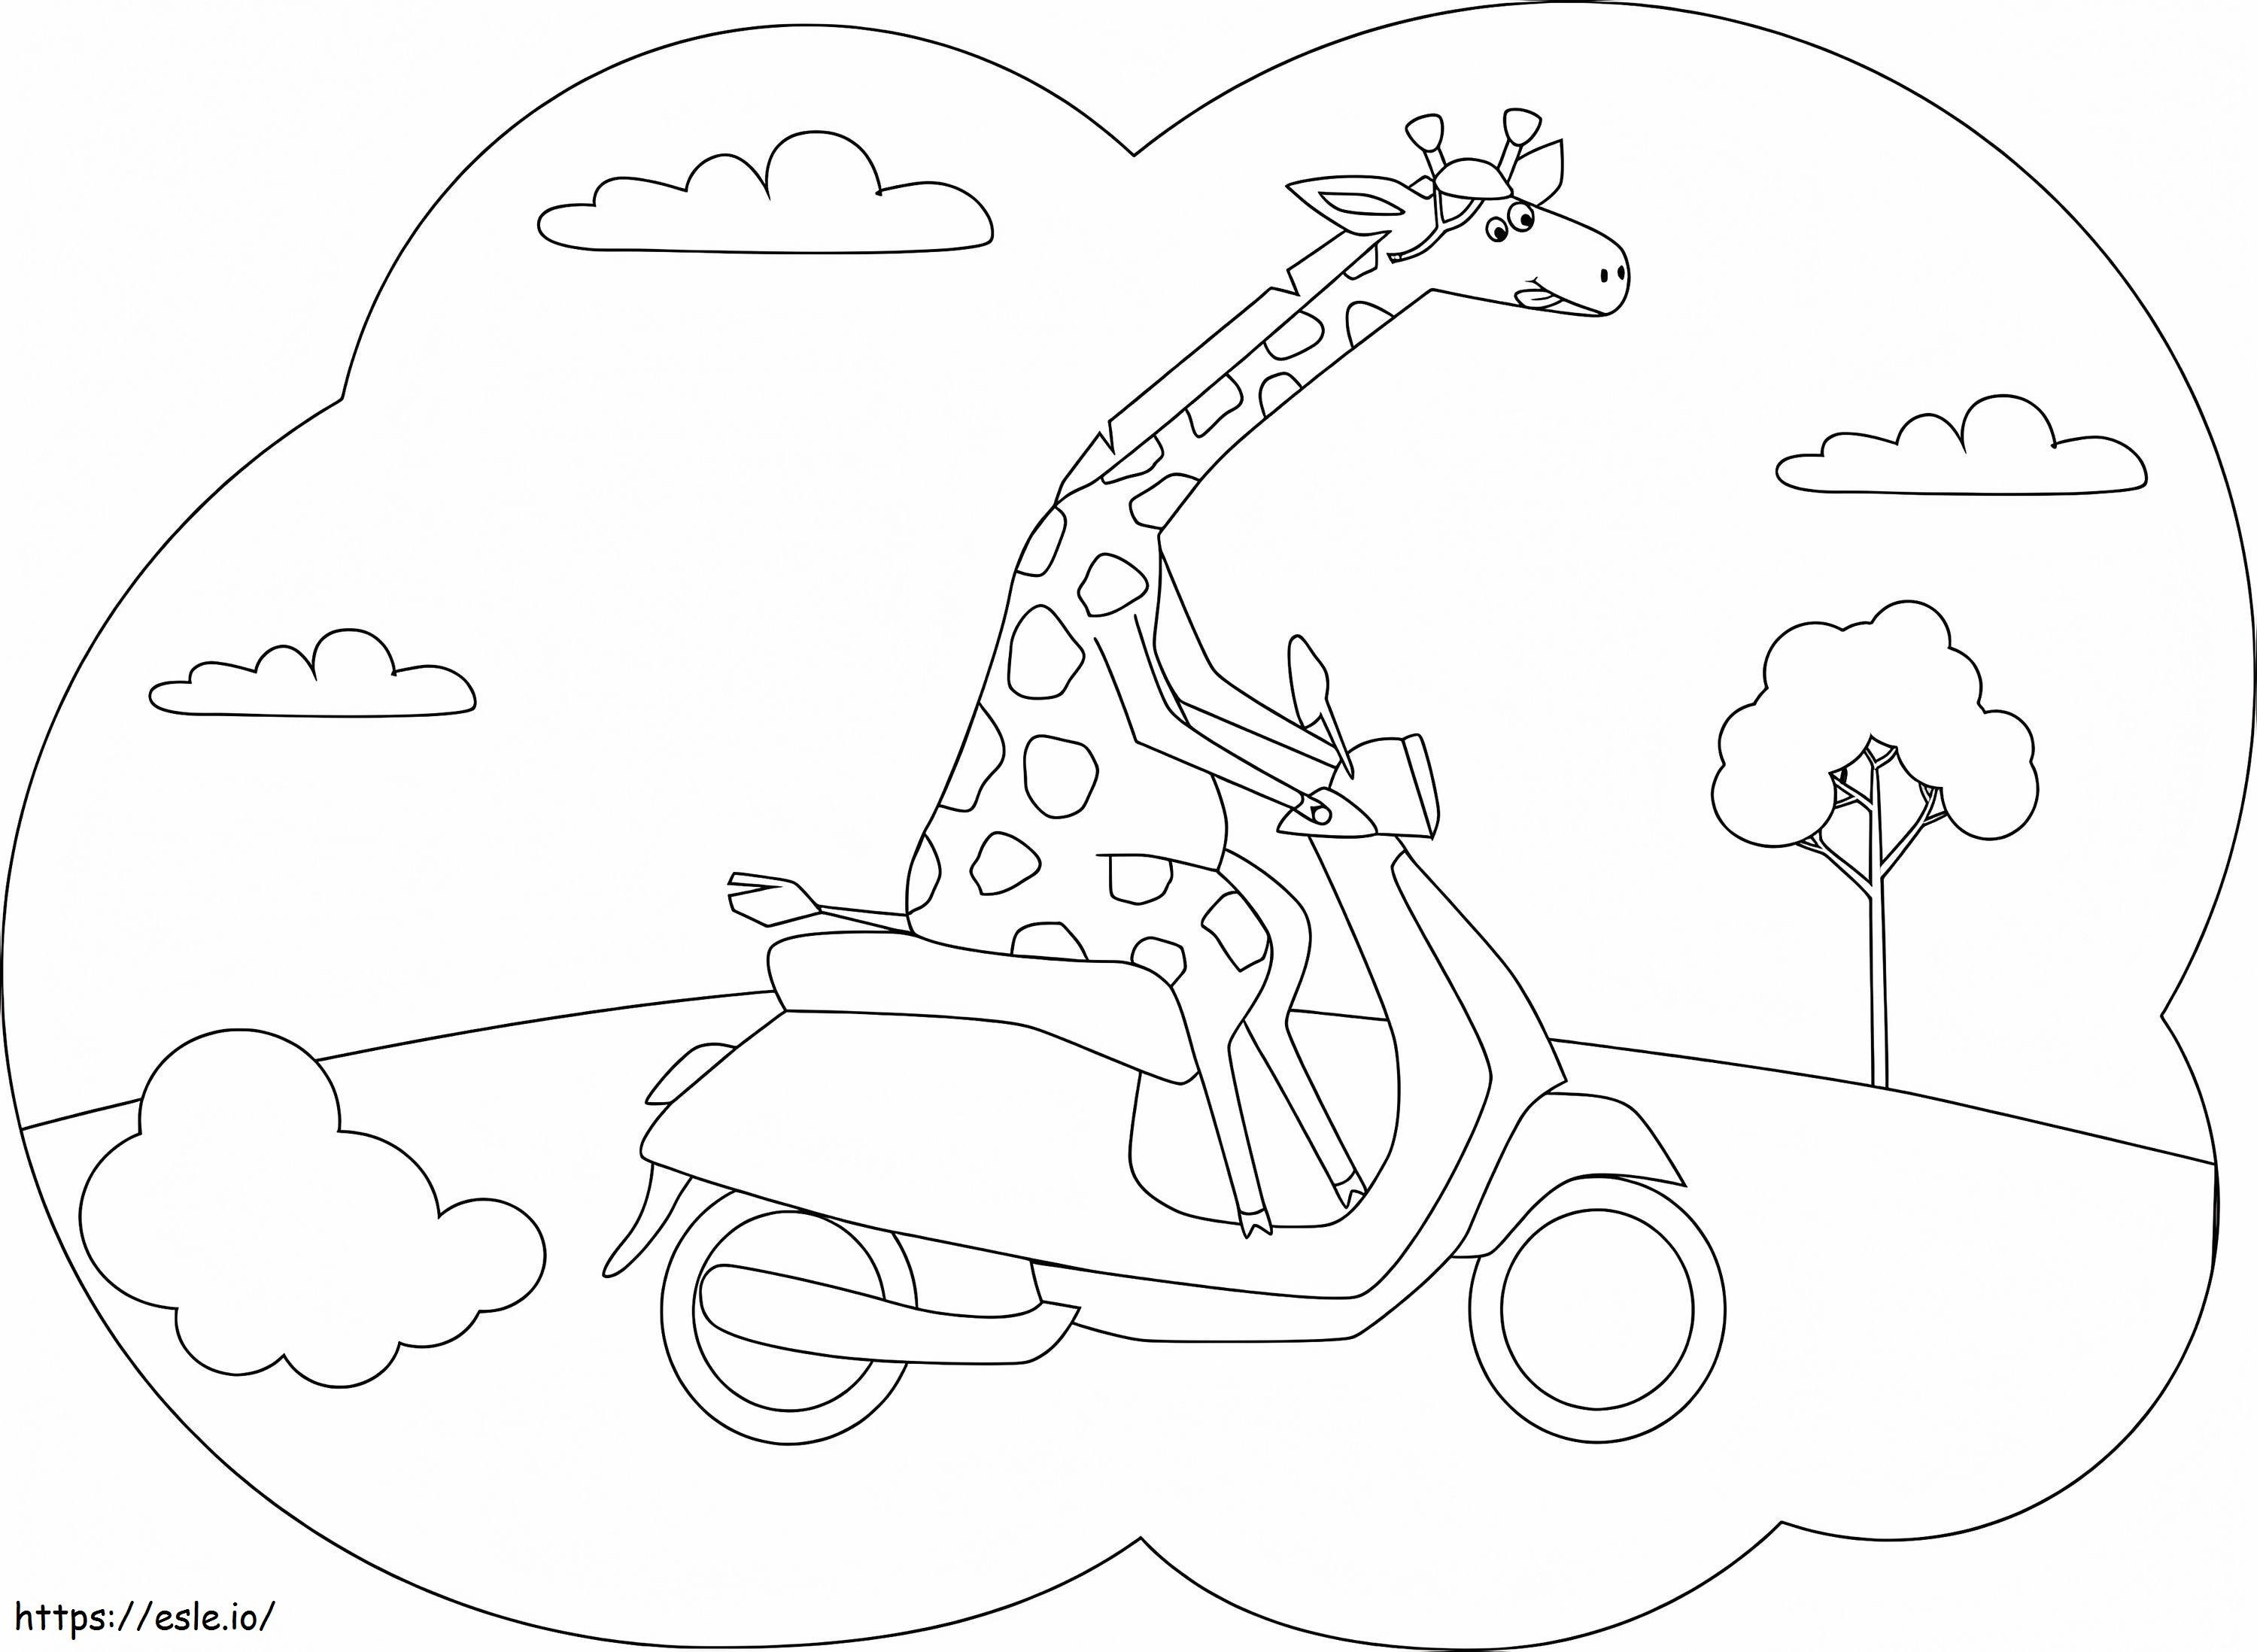 Giraffe Riding Moto coloring page